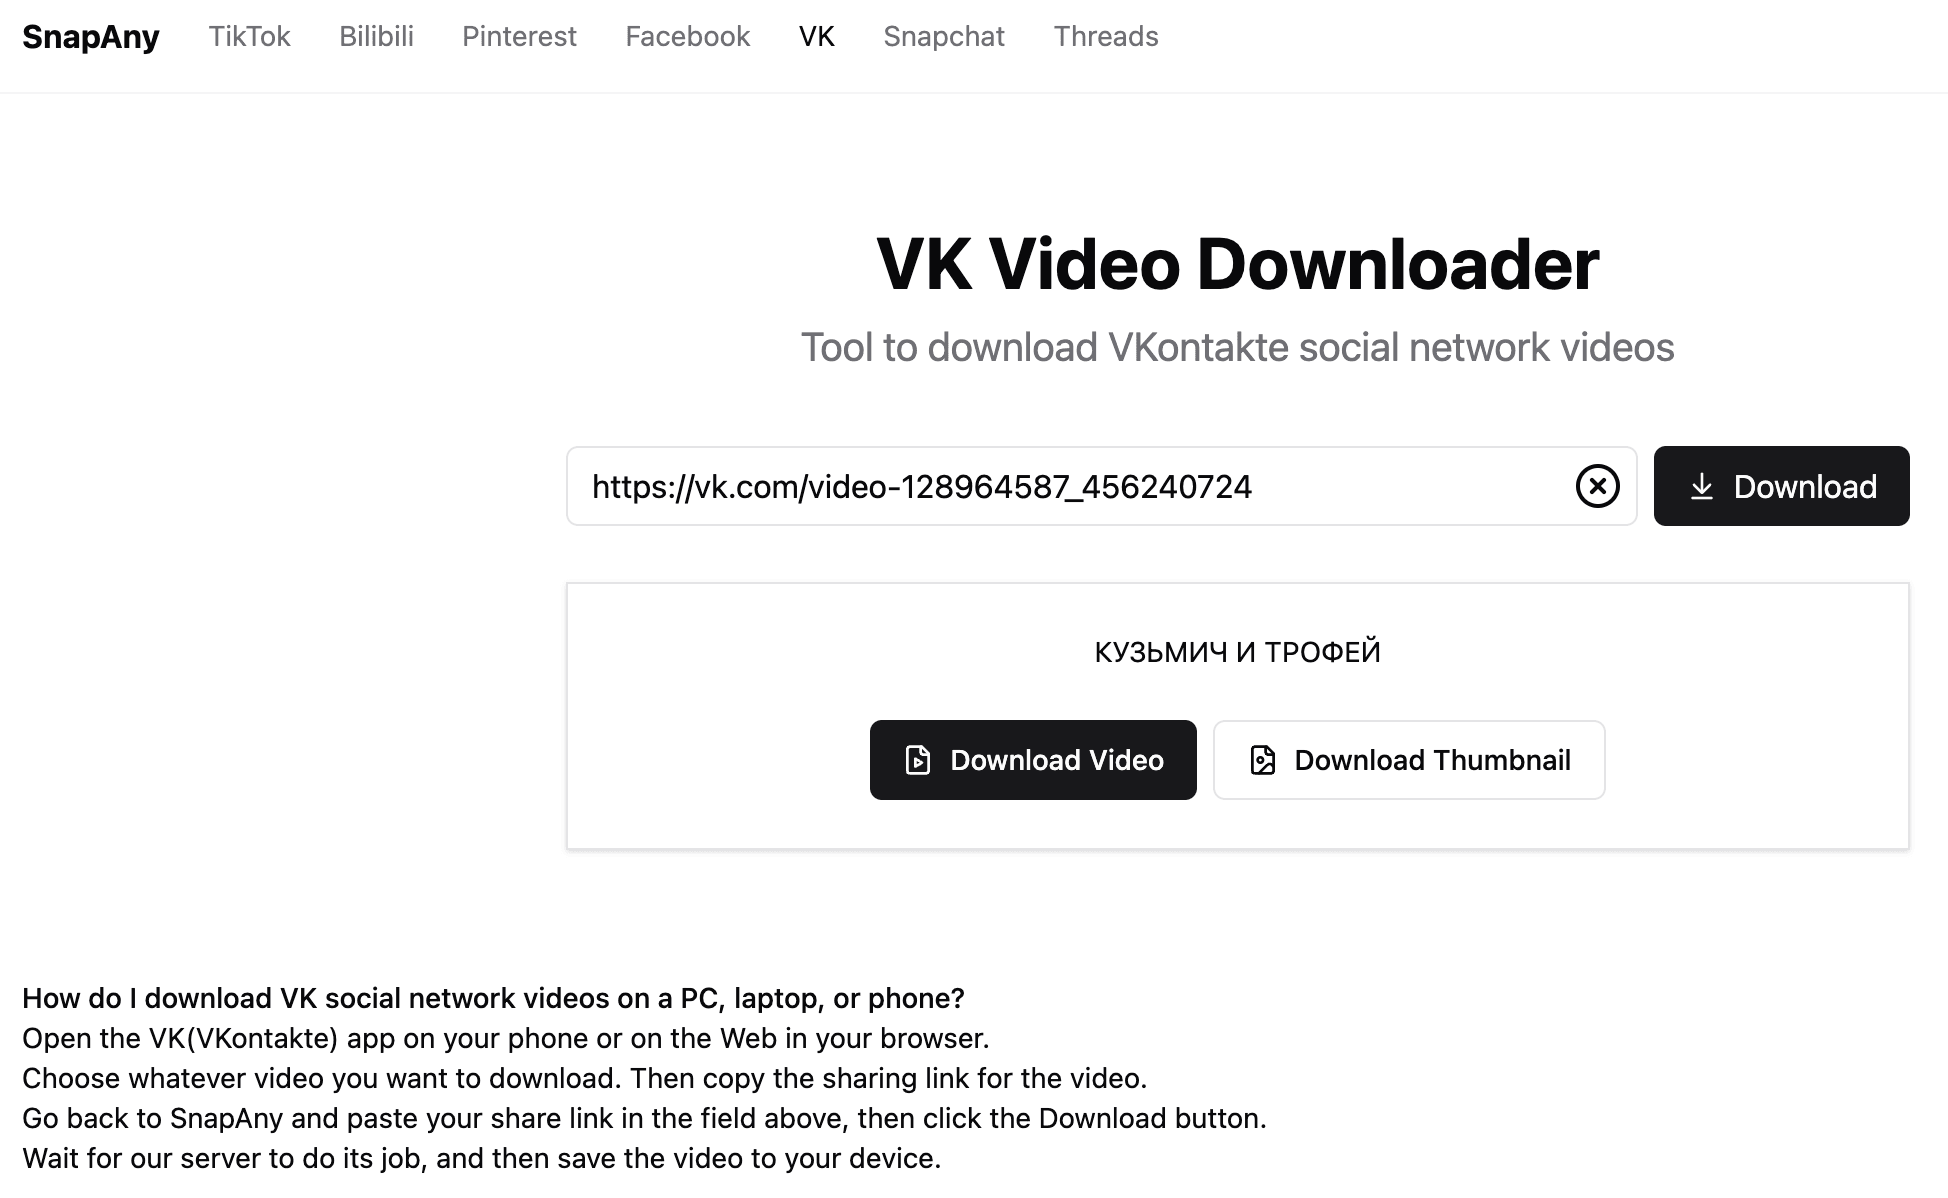 SnapAny VK Video Downloader